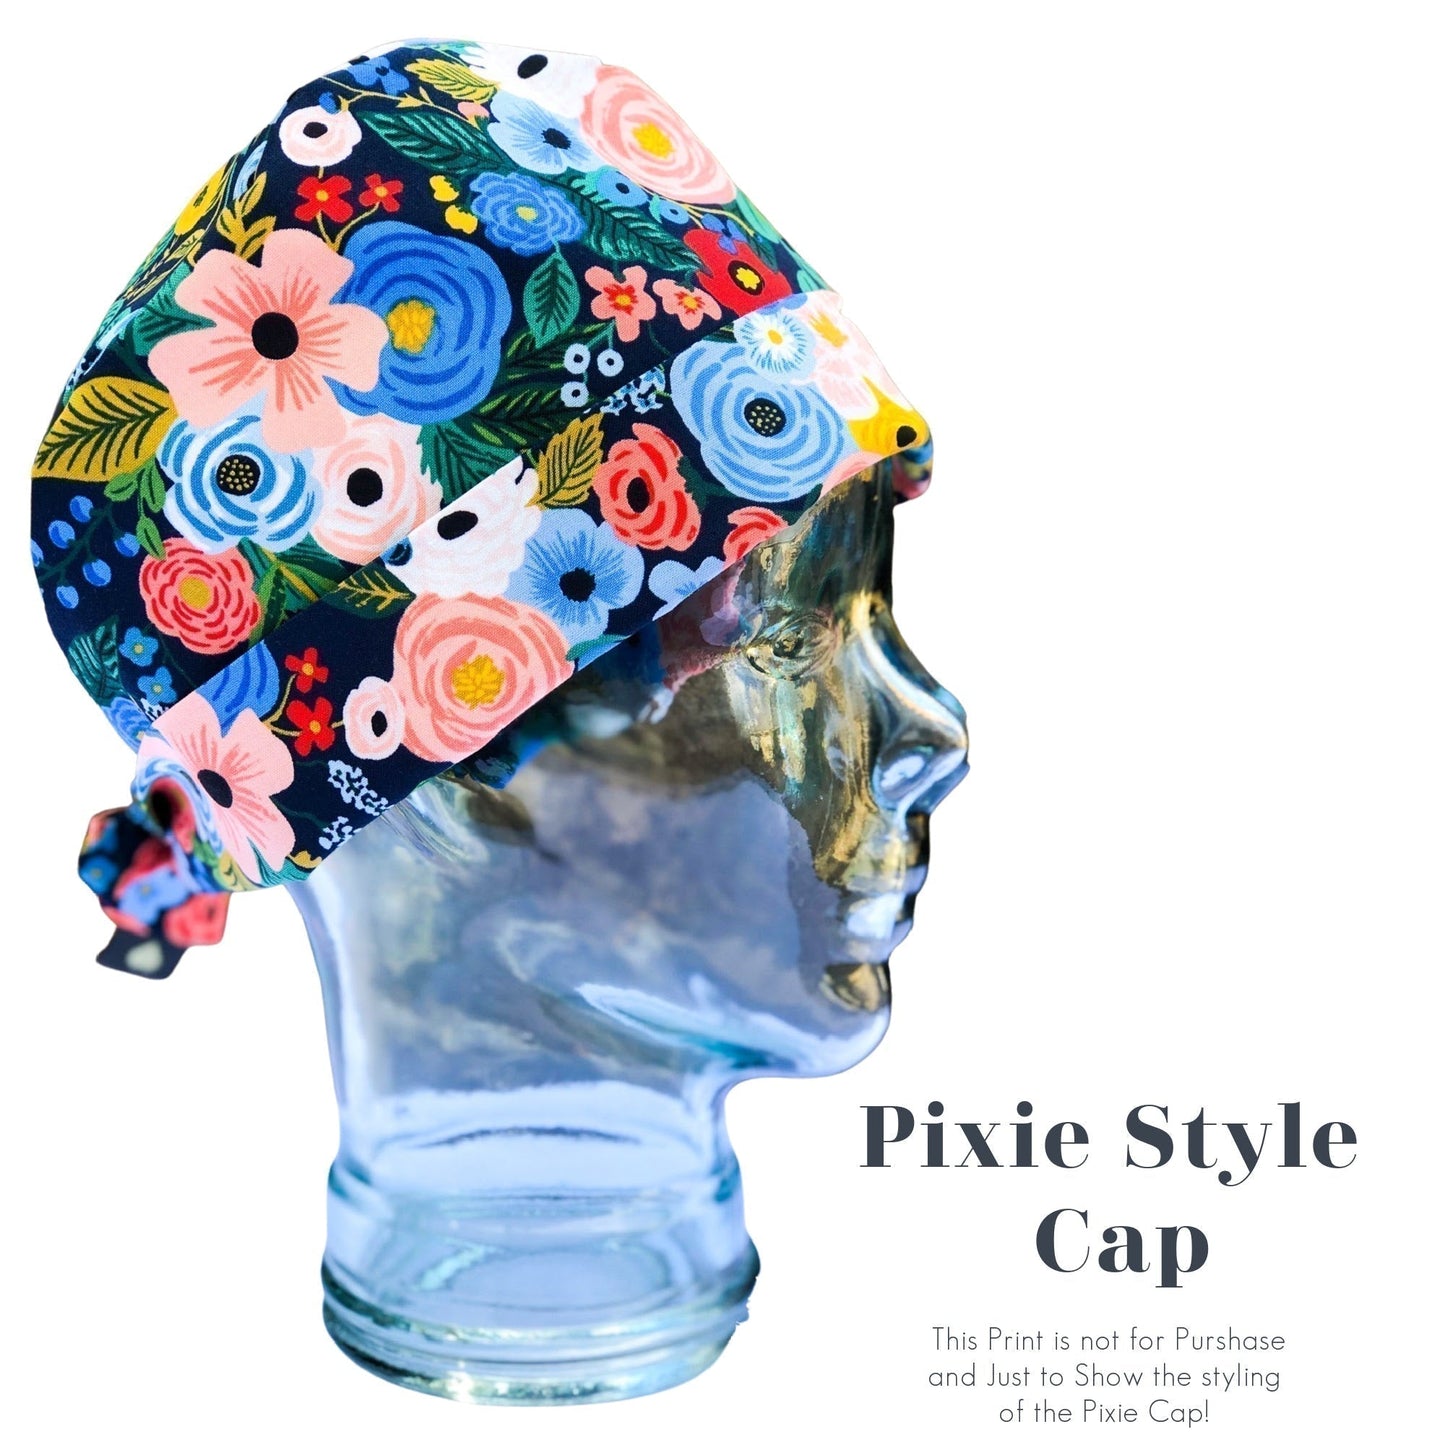 Tropical Watercolour Florals on Blue | Pixie - Custom Caps Co. 